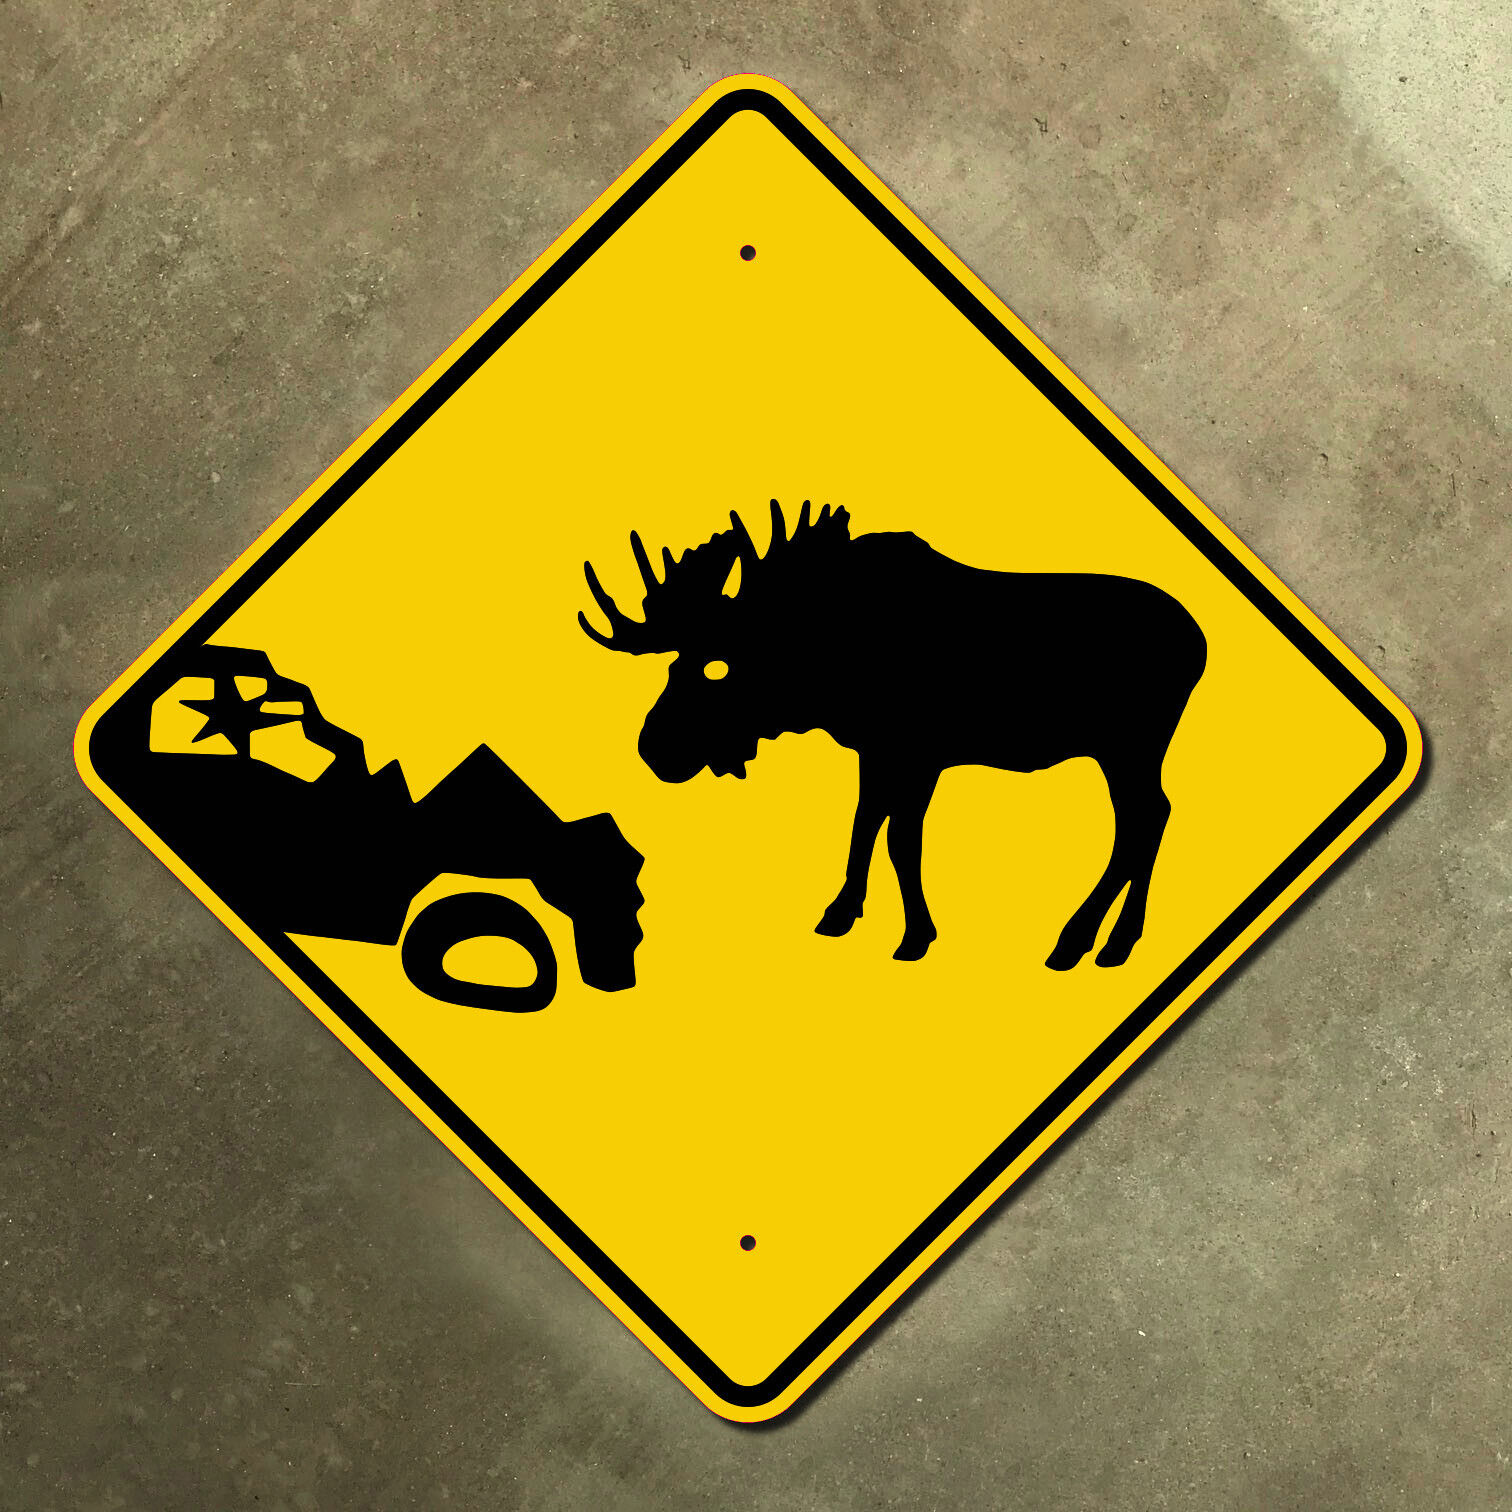 Newfoundland Canada moose warning wrecked car highway marker road sign 16x16